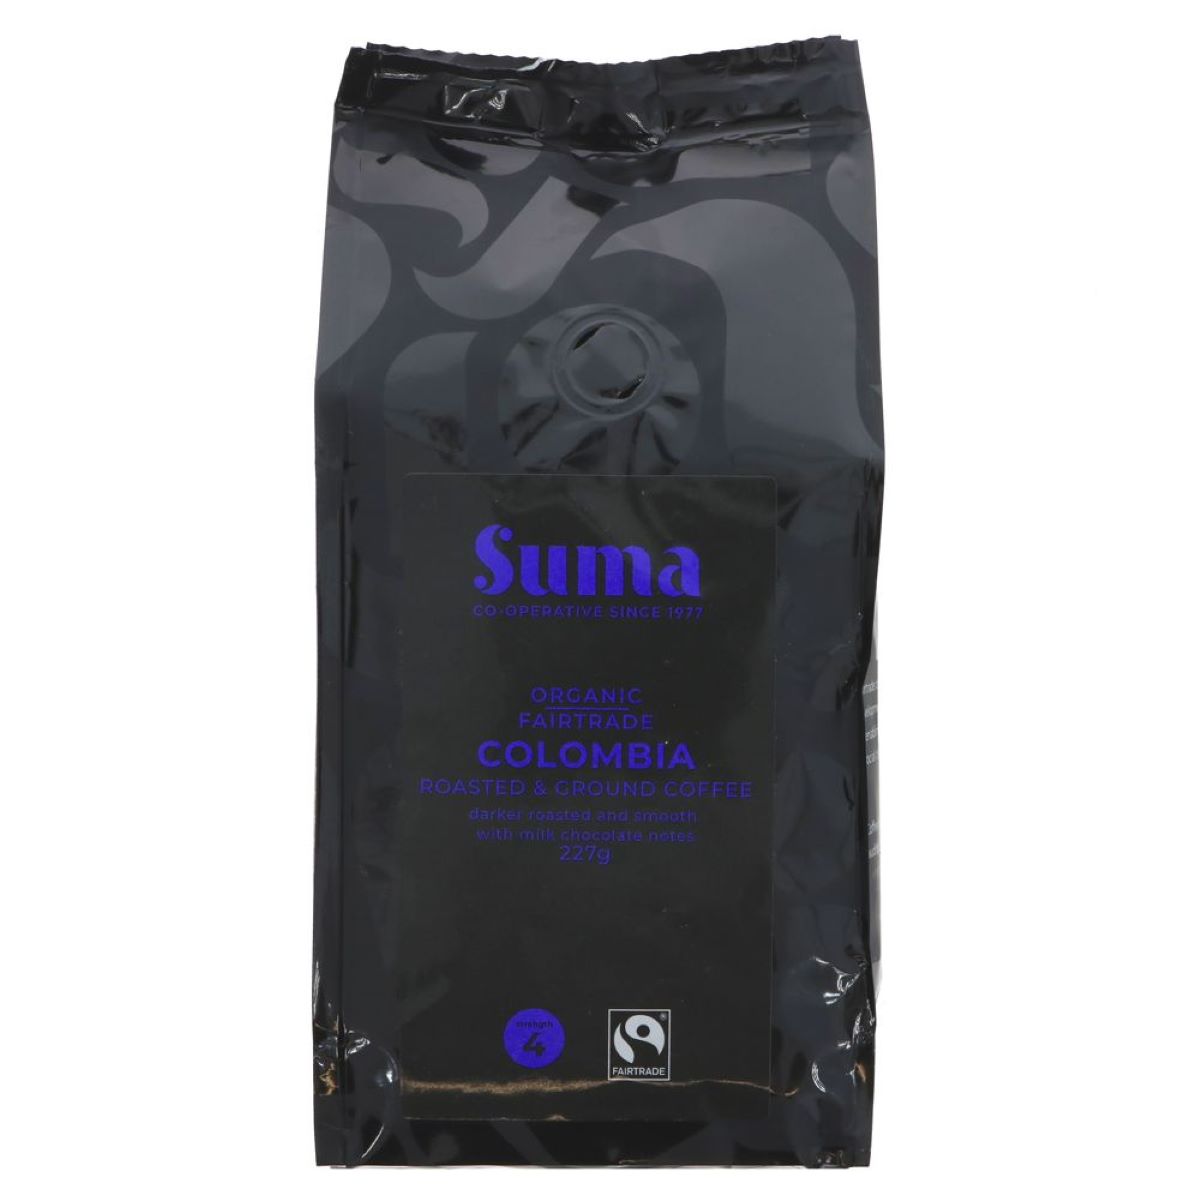 Suma Organic Fairtrade Colombia Coffee Roasted & Grounded 227g